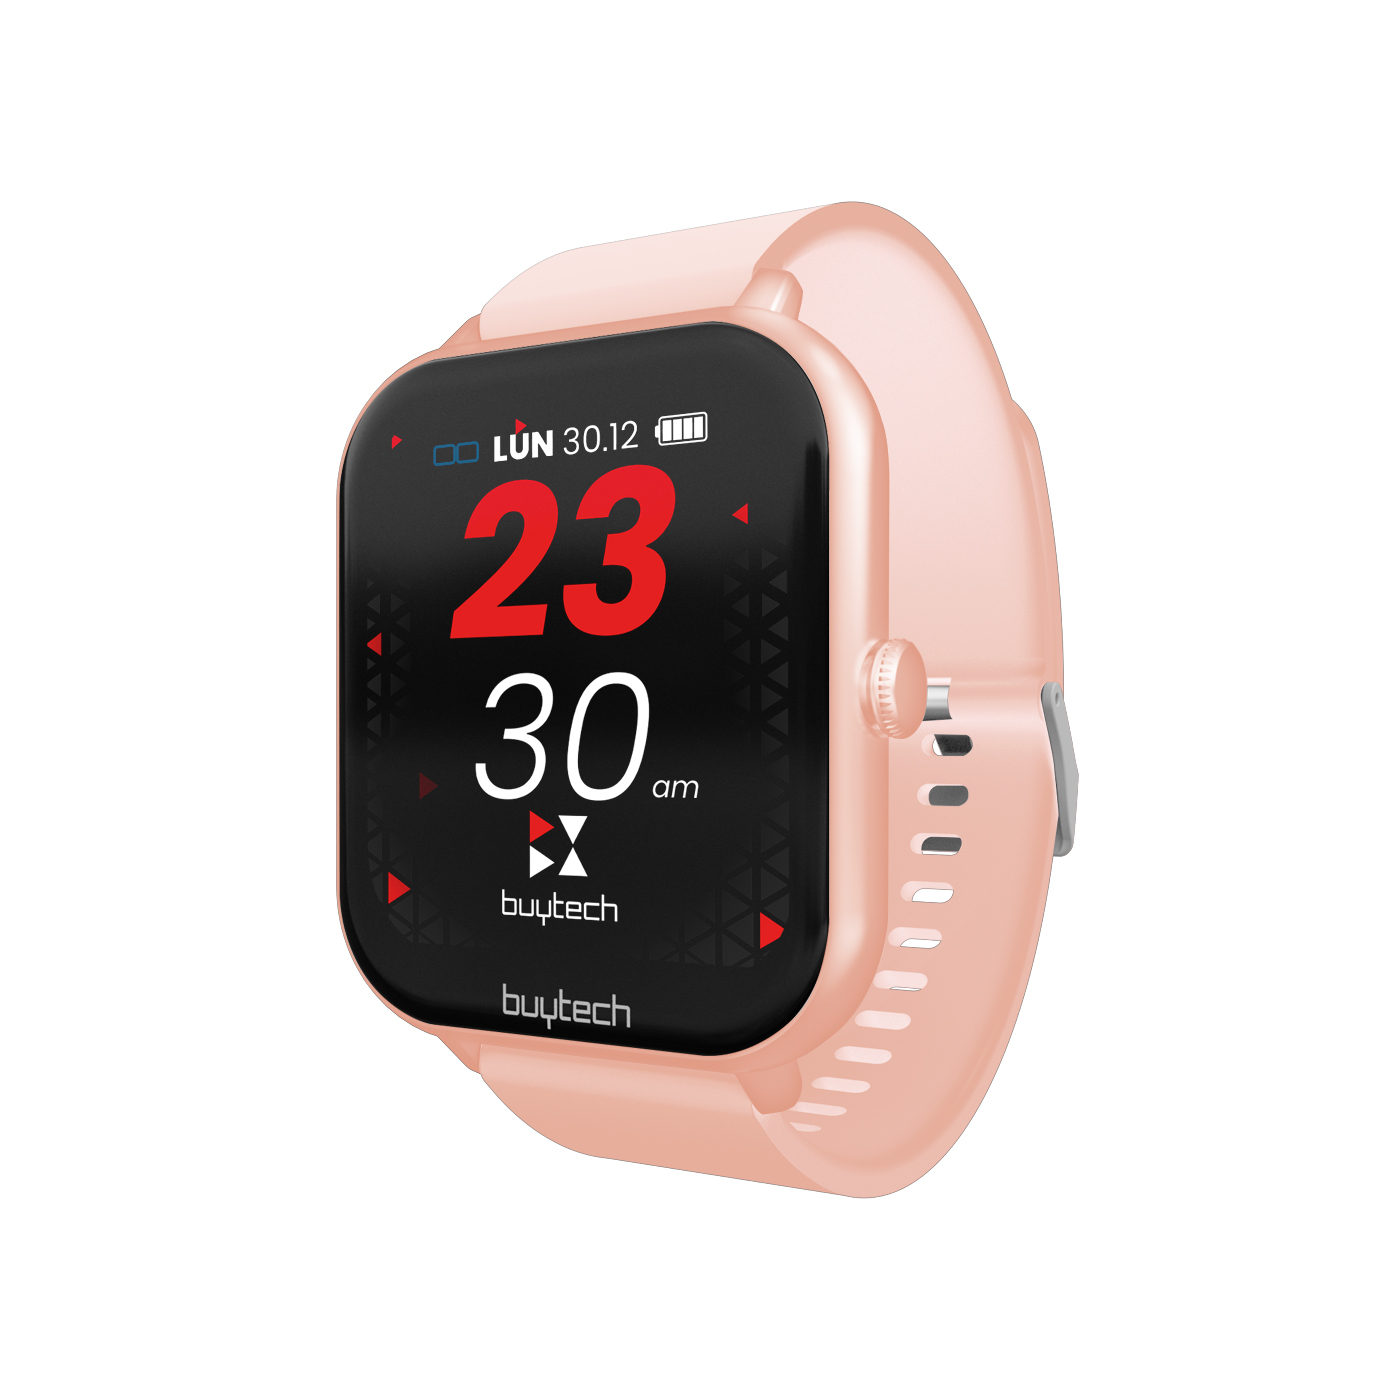 Buytech smartwatch cassa pink cinturino in silicone BY-ALFA-PK